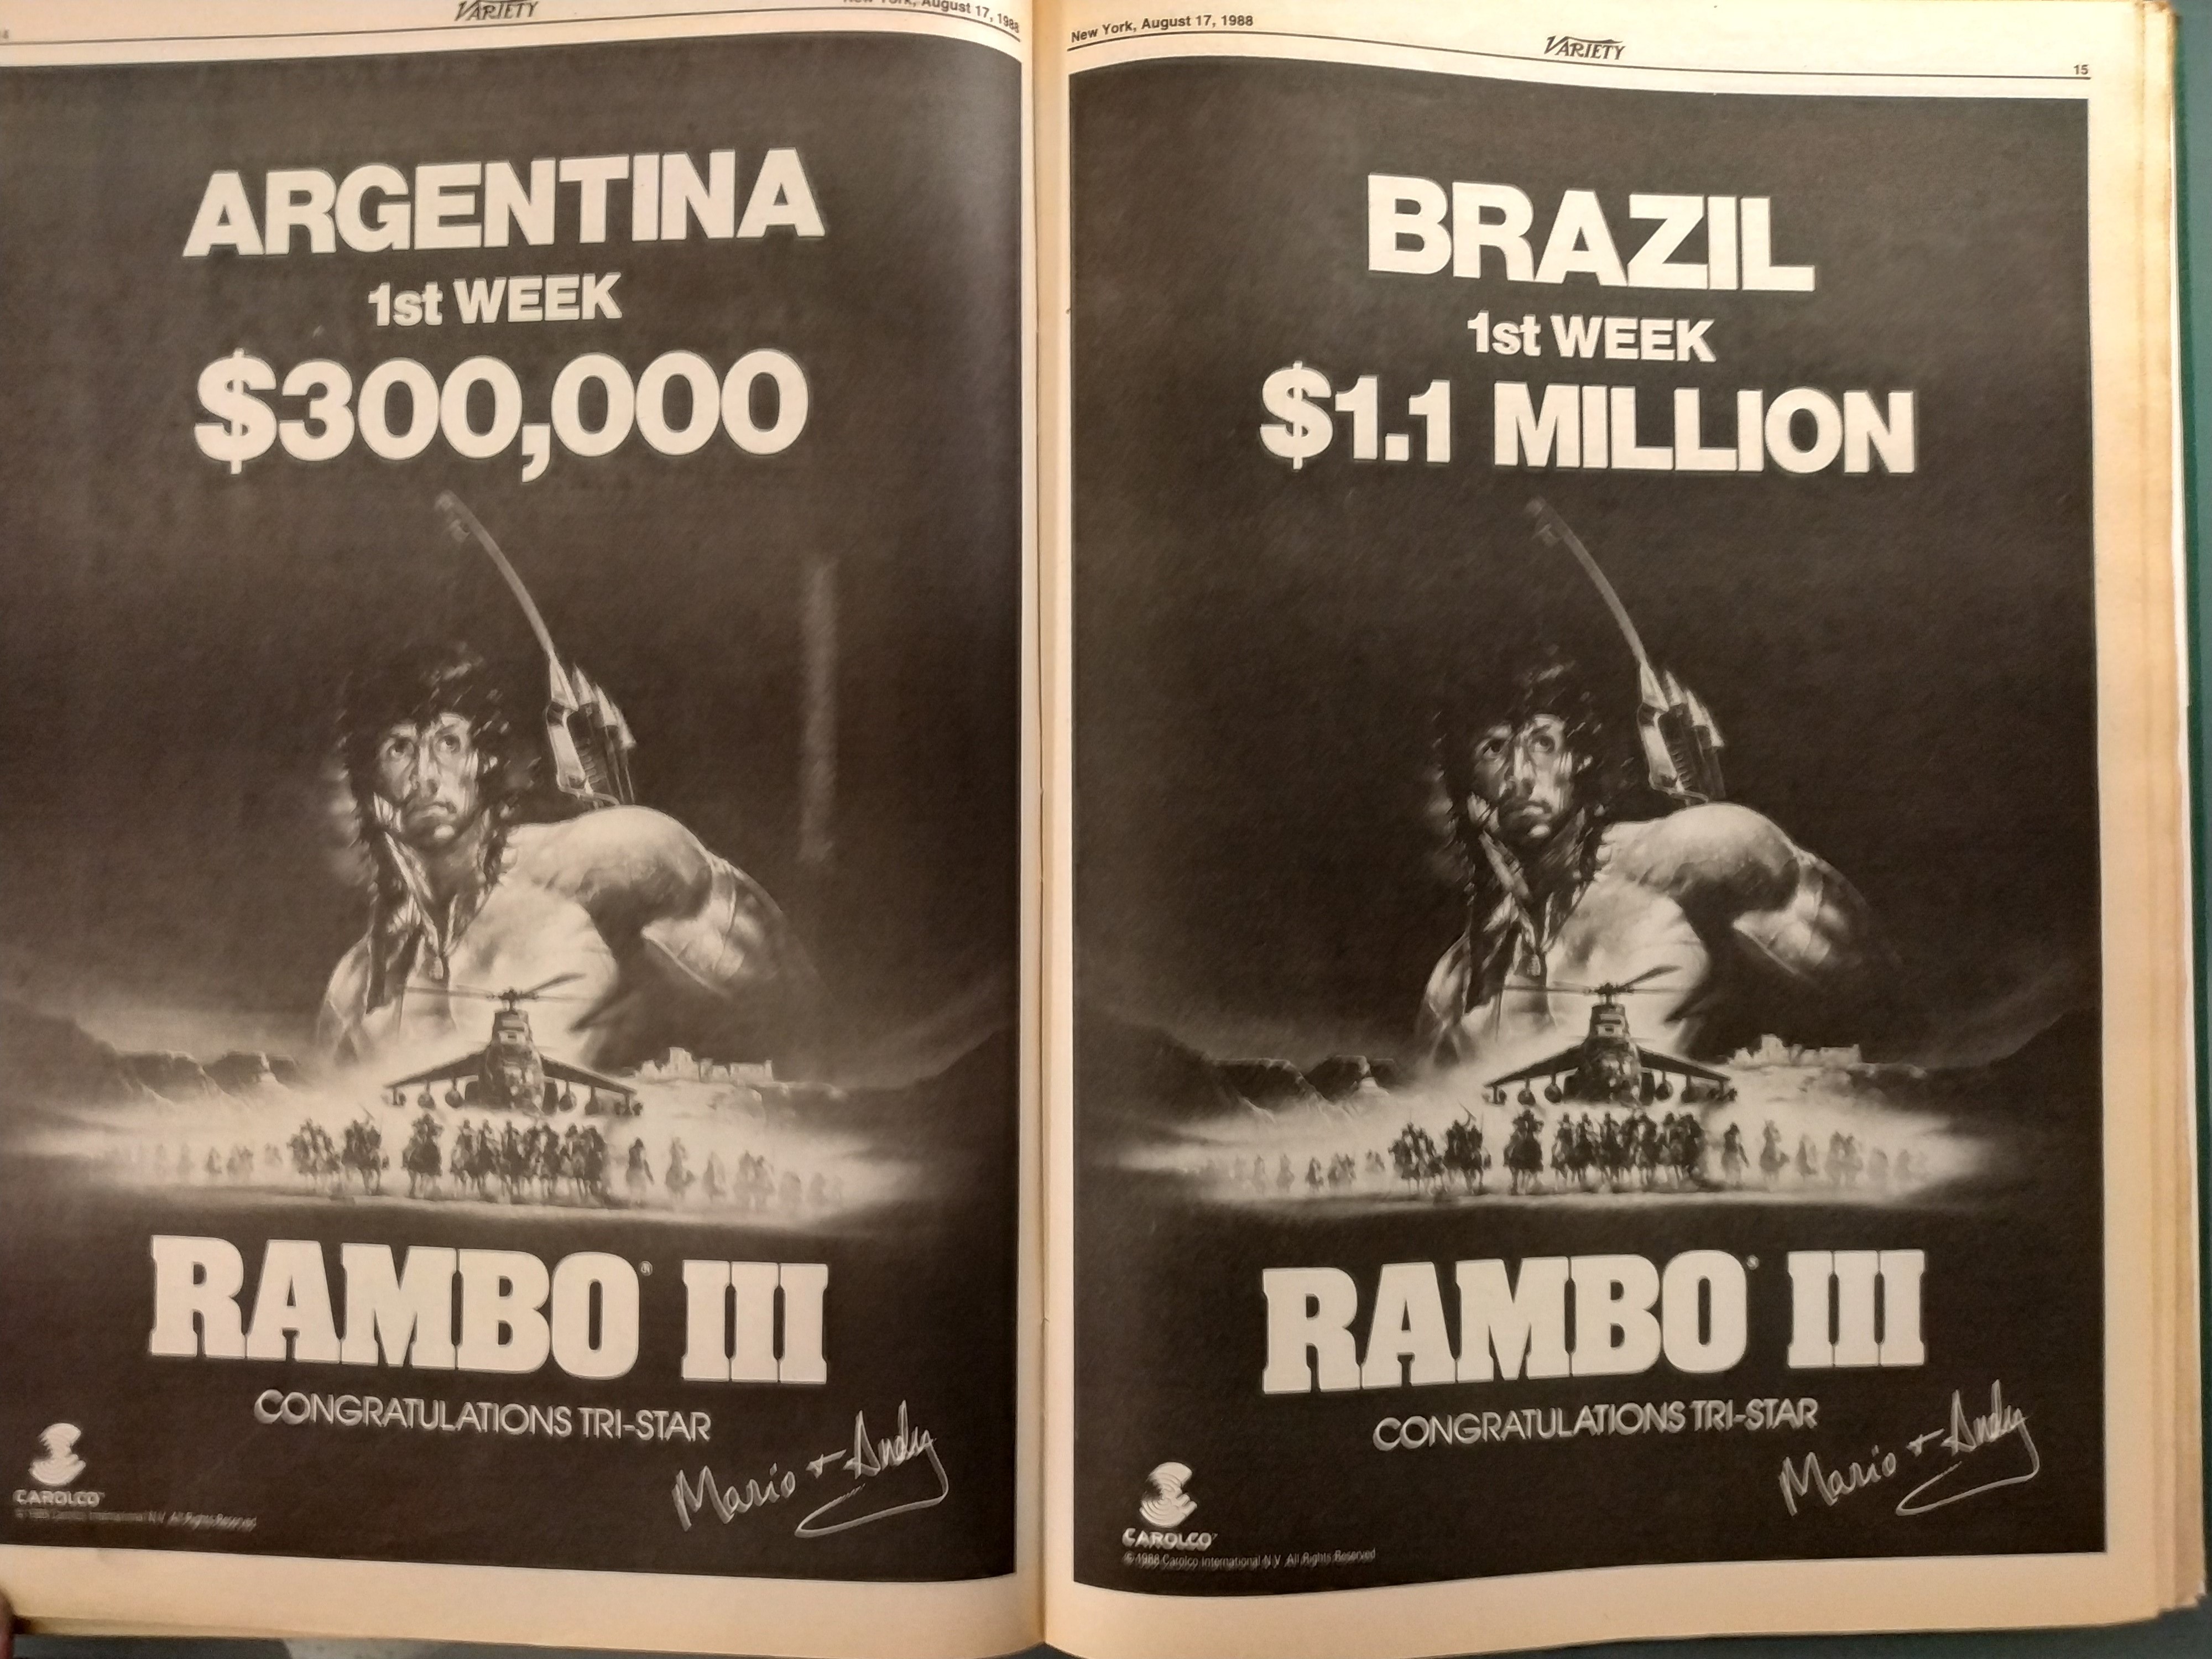 Ficha técnica completa - Rambo III - 19 de Agosto de 1988